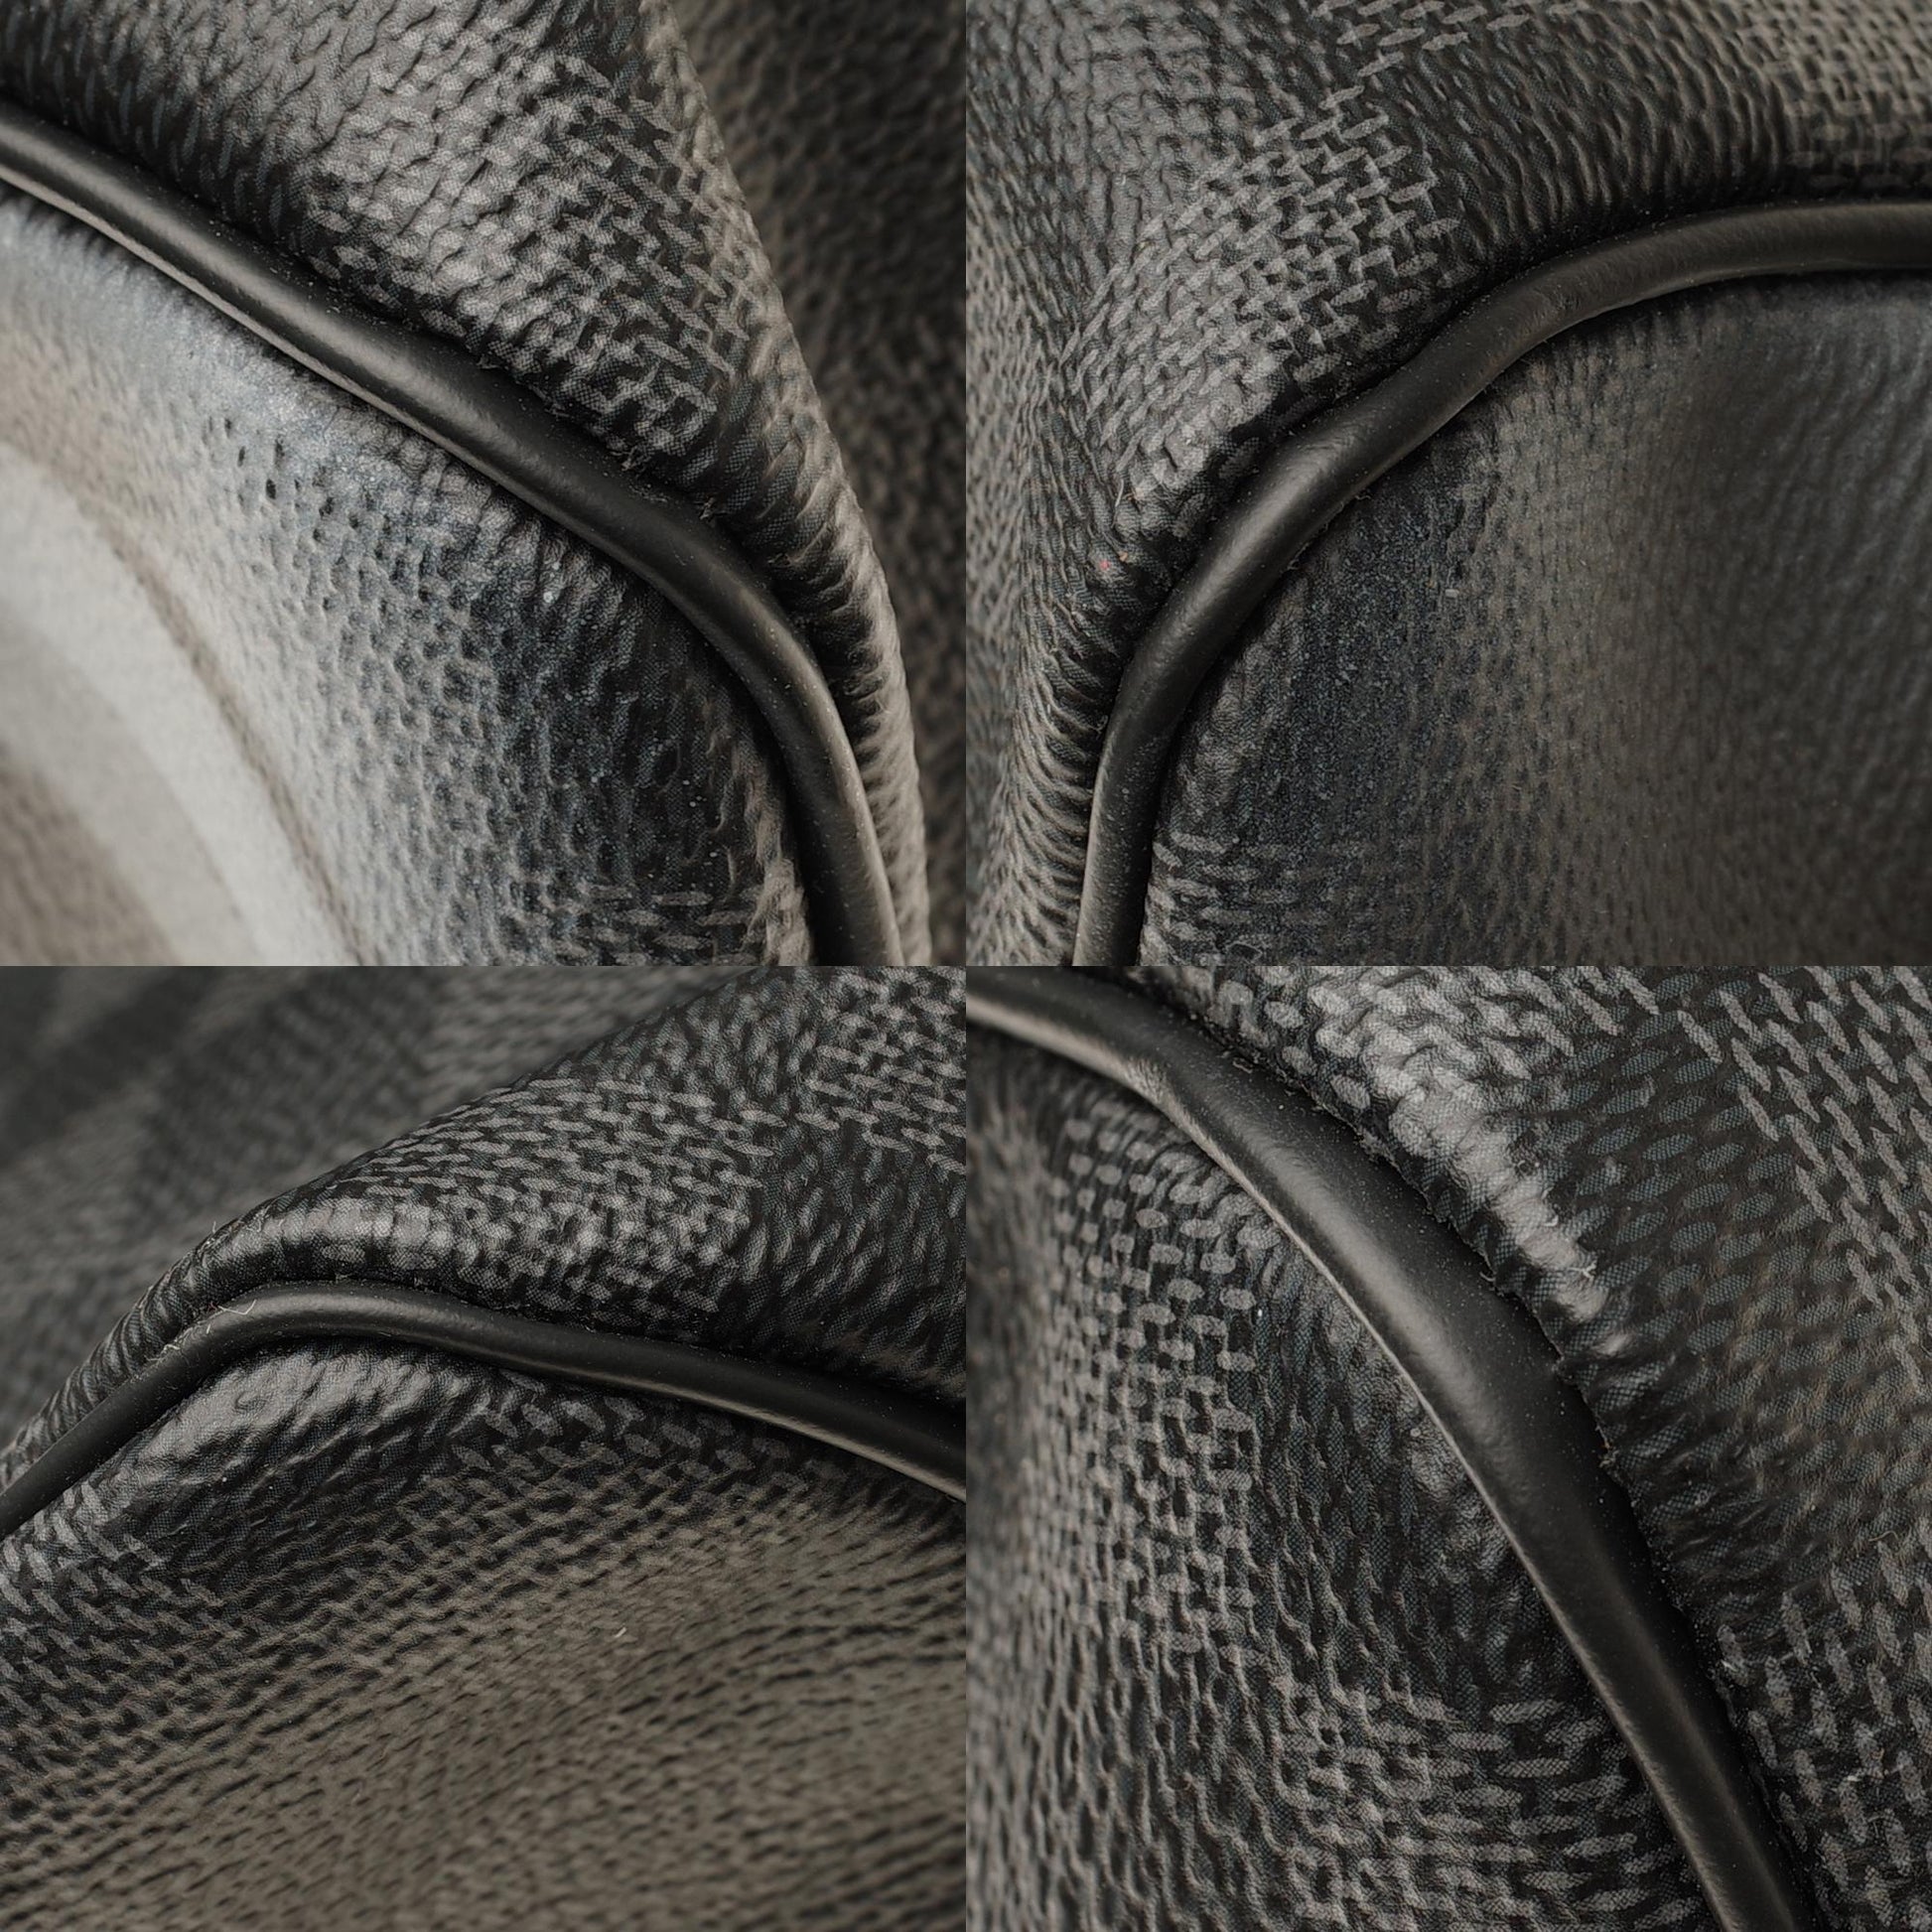 NEW Louis Vuitton Keepall 55 damier graphite strap customized BATBAG II!